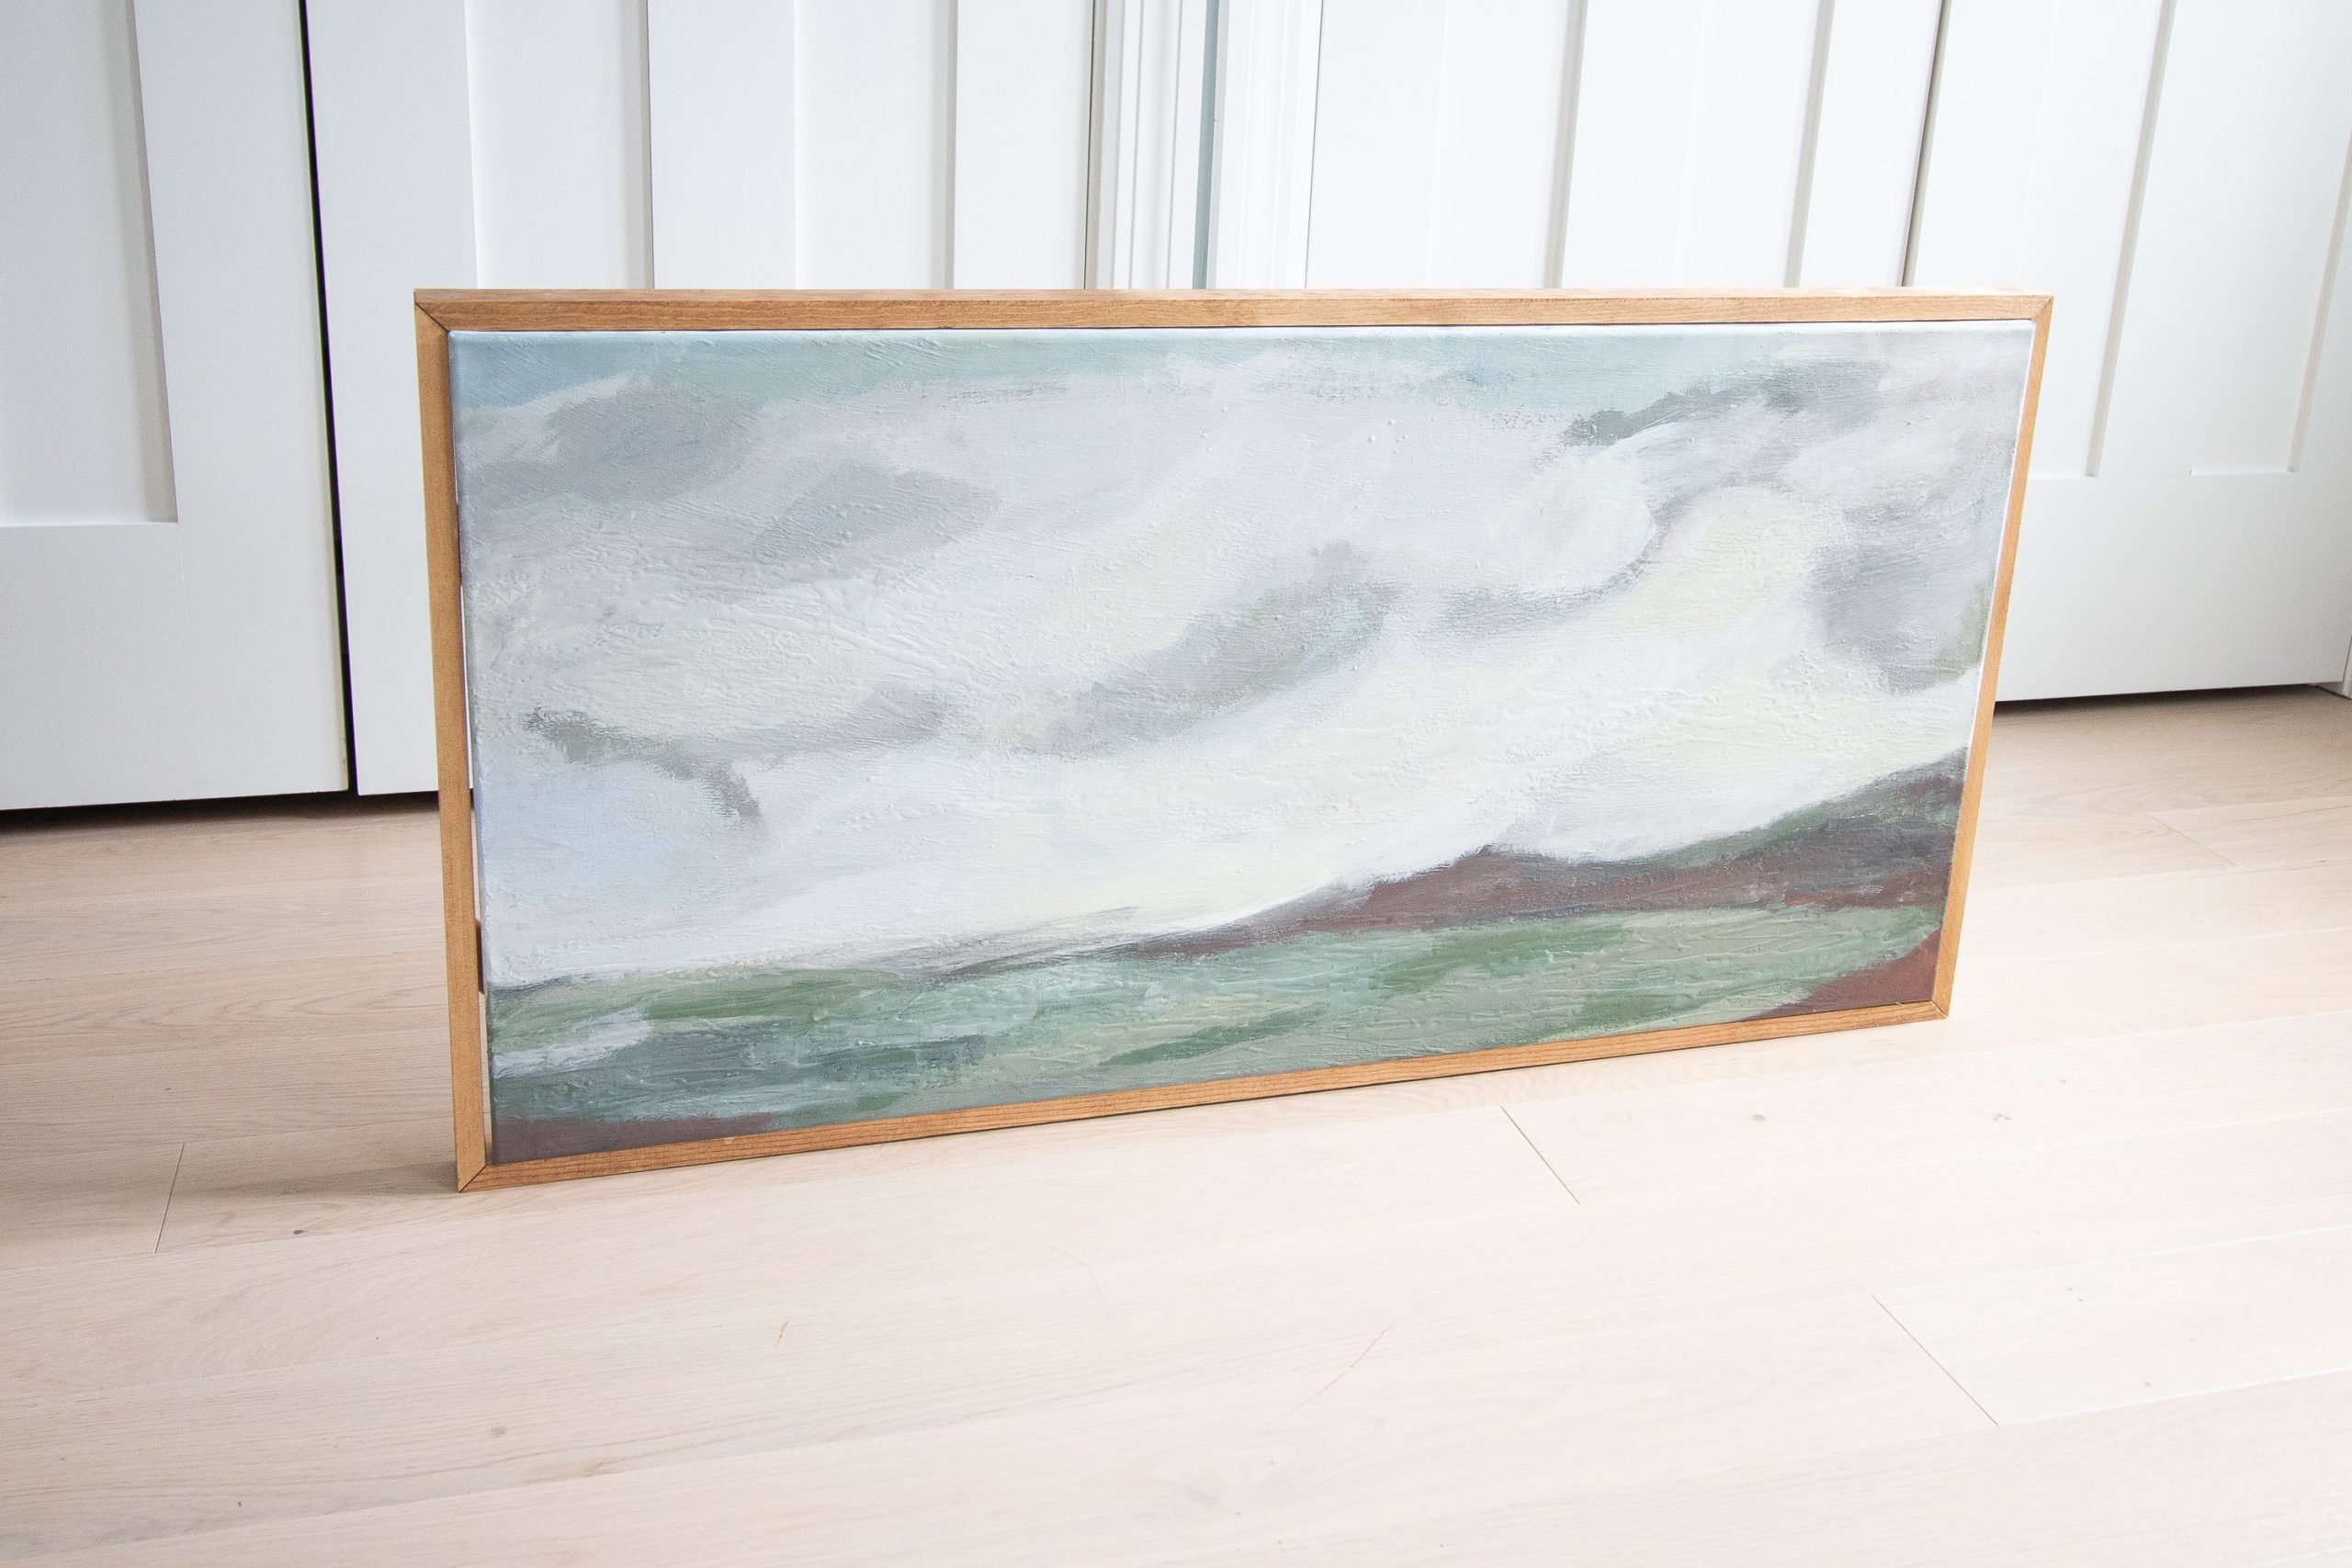 How to make a DIY canvas frame